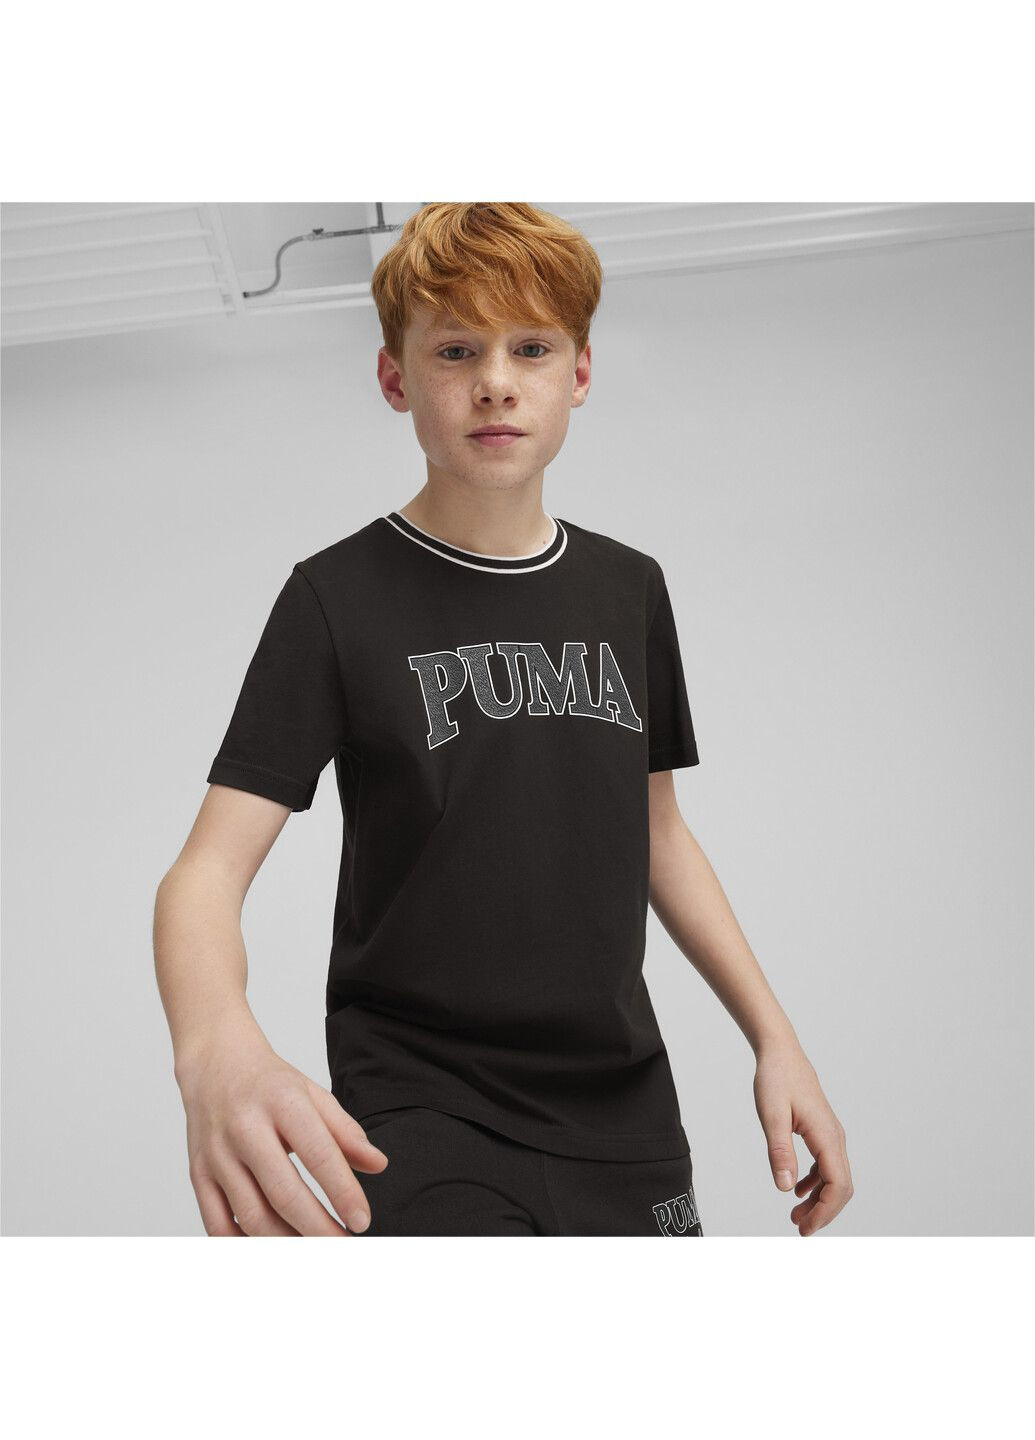 Детская футболка SQUAD Youth Tee Puma (278652804)